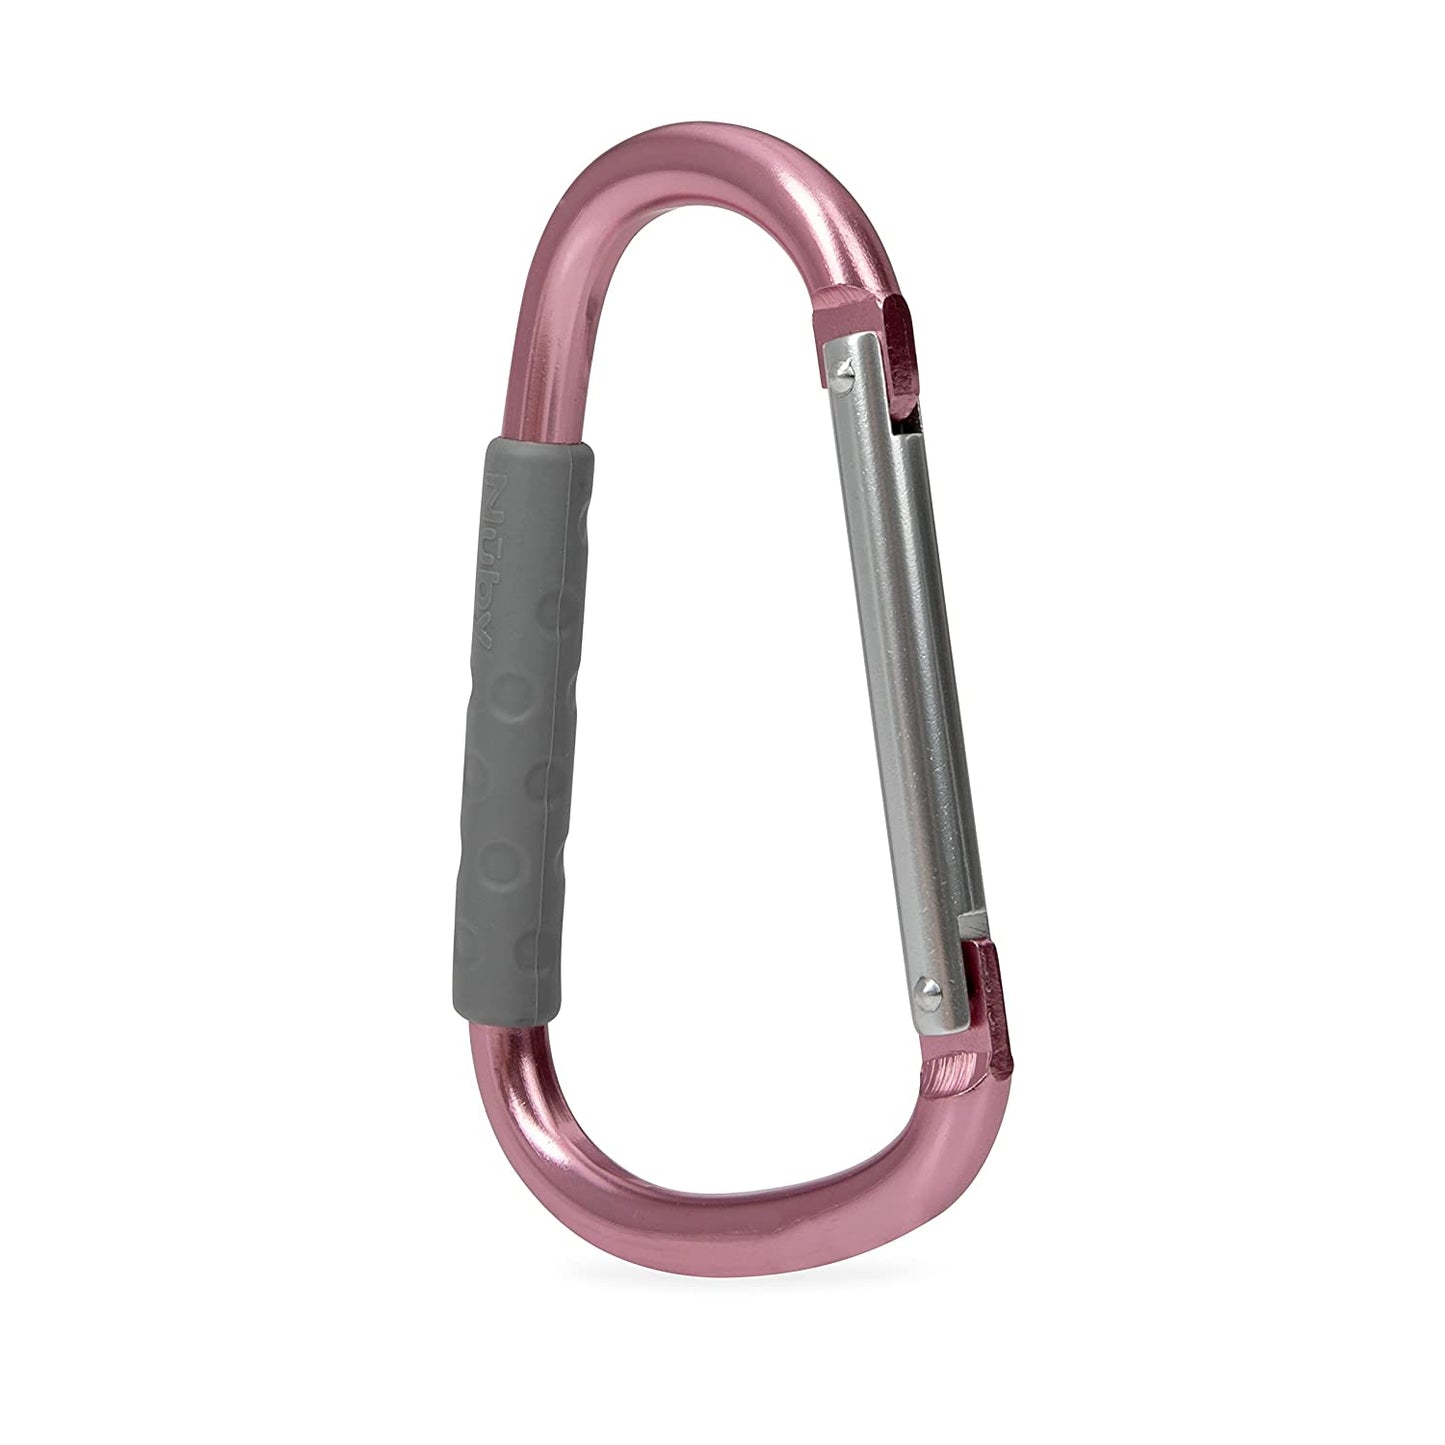 Nuby Large Handy Hook Carabiner Stroller Clip with Textured Soft Grip: Rose Gold